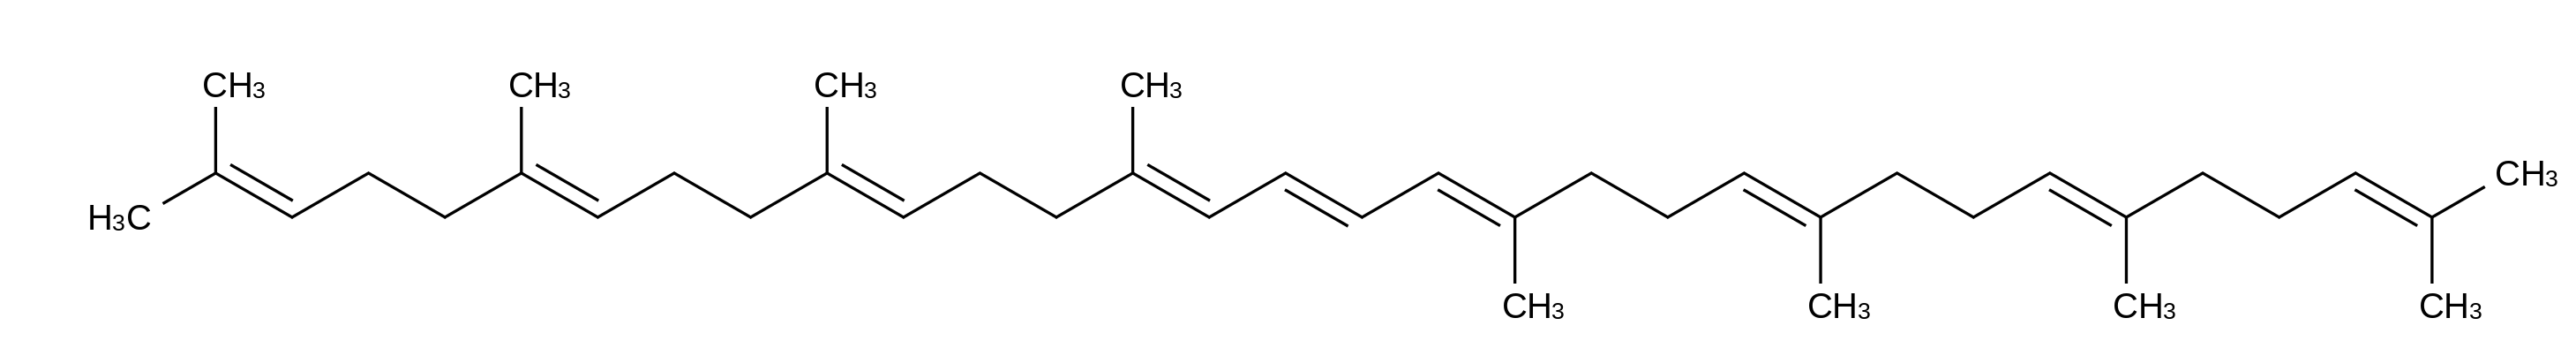 trans-Phytoene (Technical grade)(Contain ~30% Cis isomer)